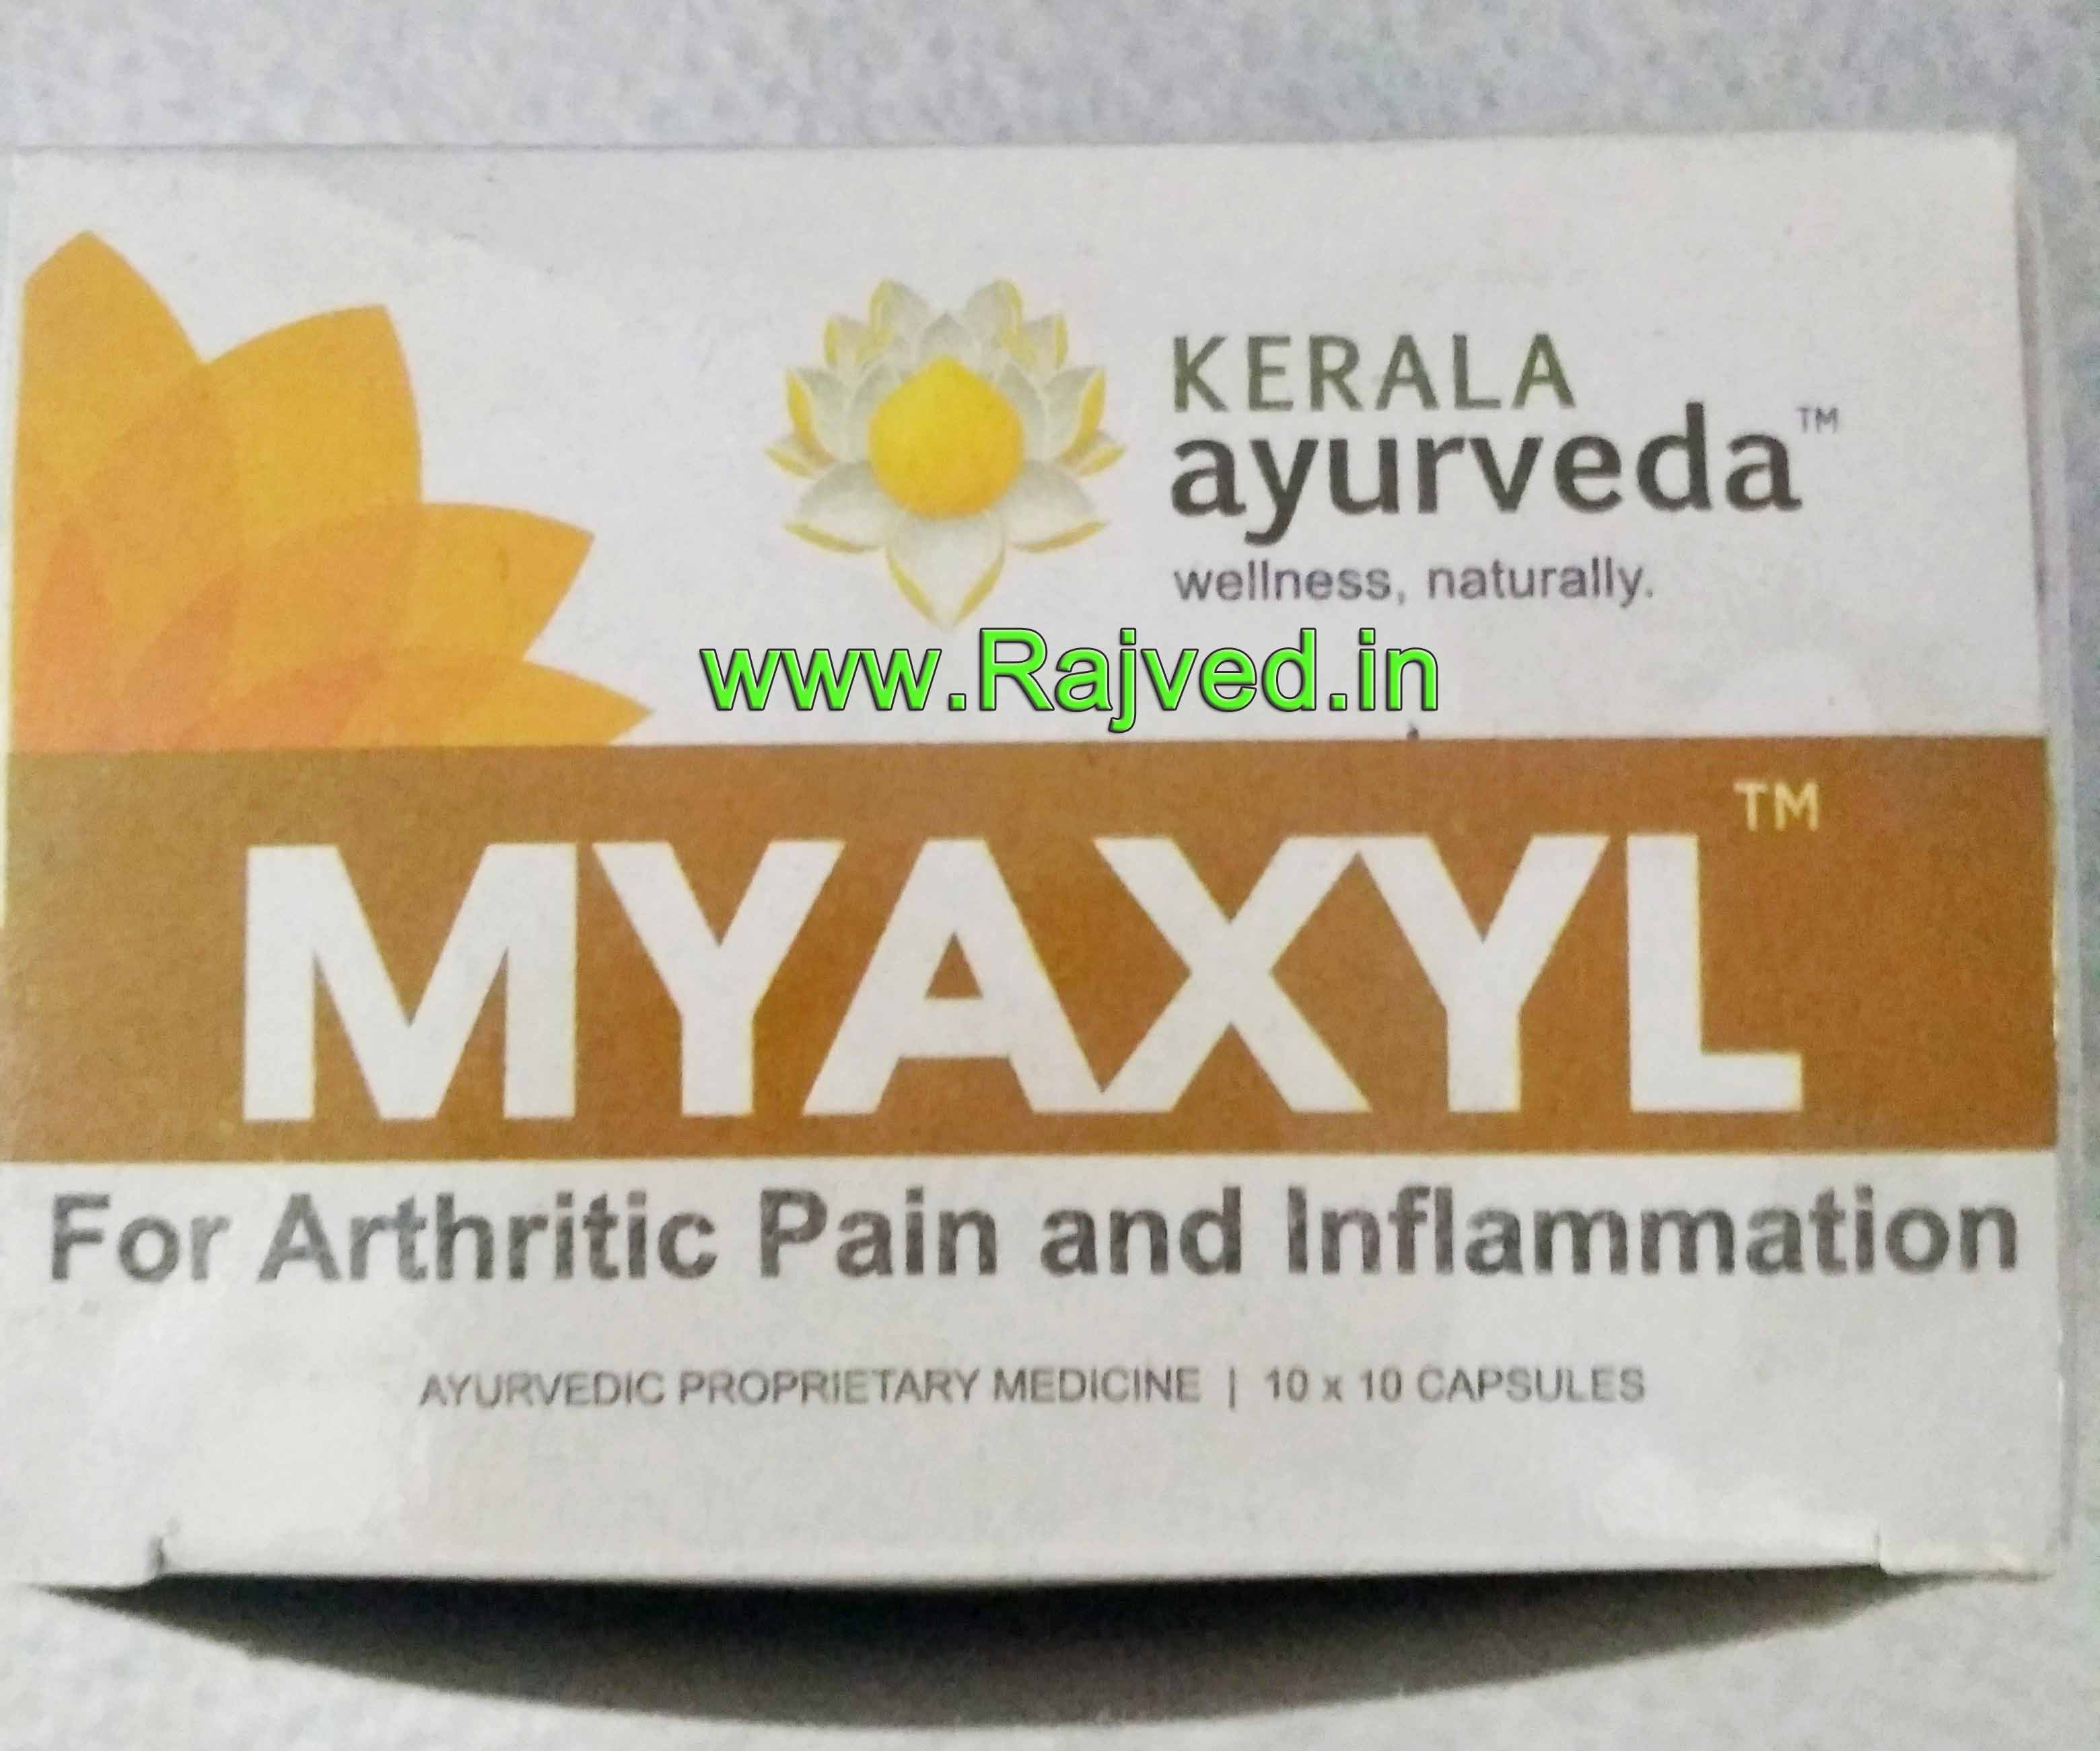 myaxyl capsule 100 cap upto 15% off Kerala Ayurveda Ltd